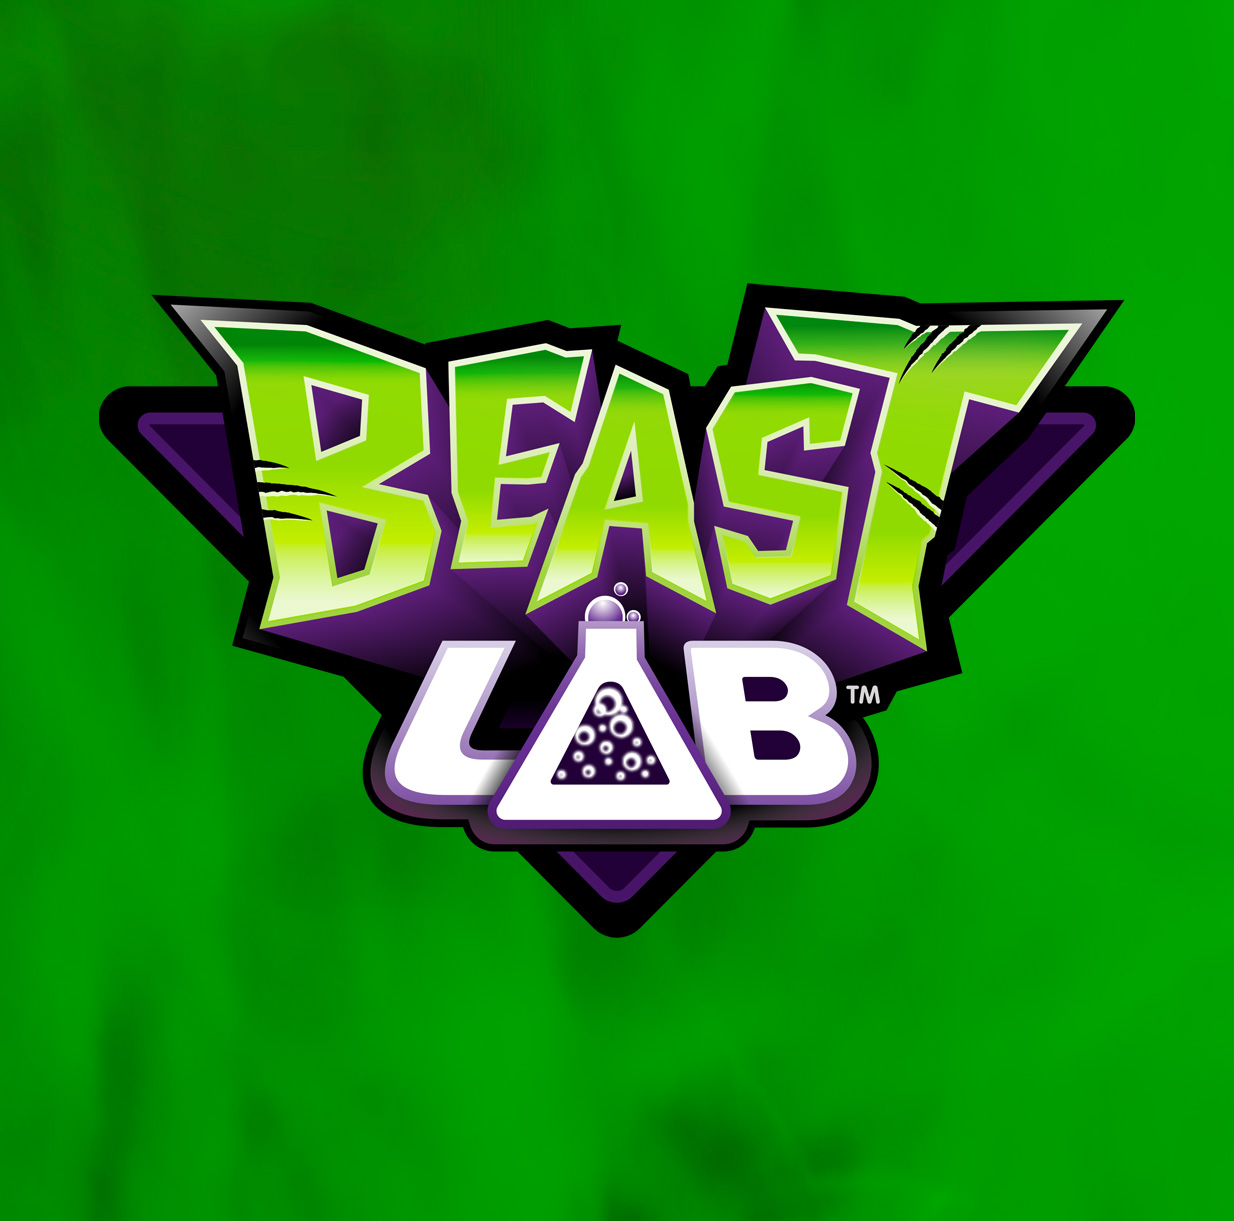 beast lab website logo